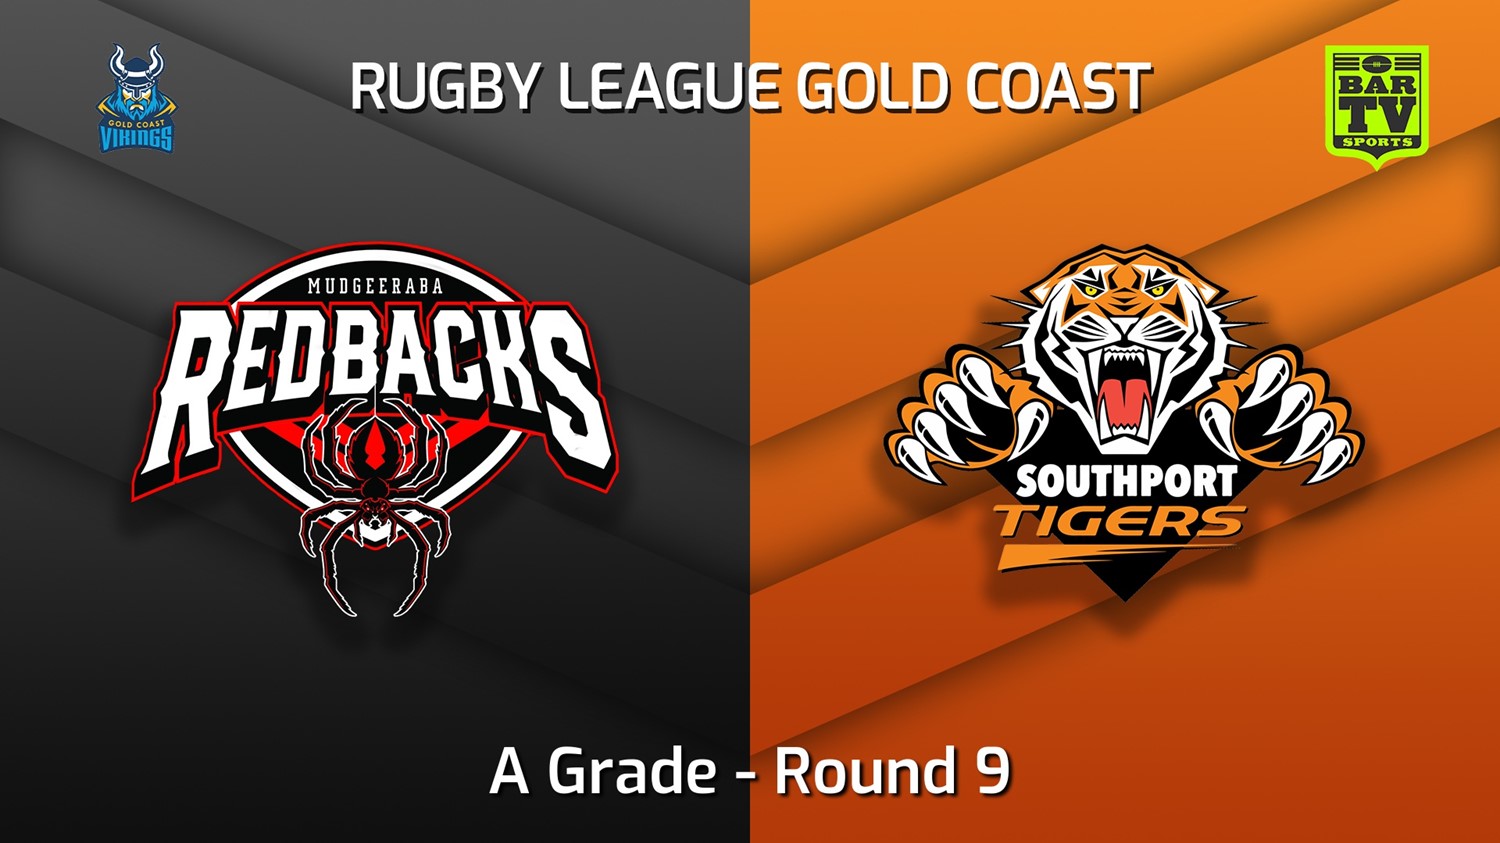 220605-Gold Coast Round 9 - A Grade - Mudgeeraba Redbacks v Southport Tigers Slate Image